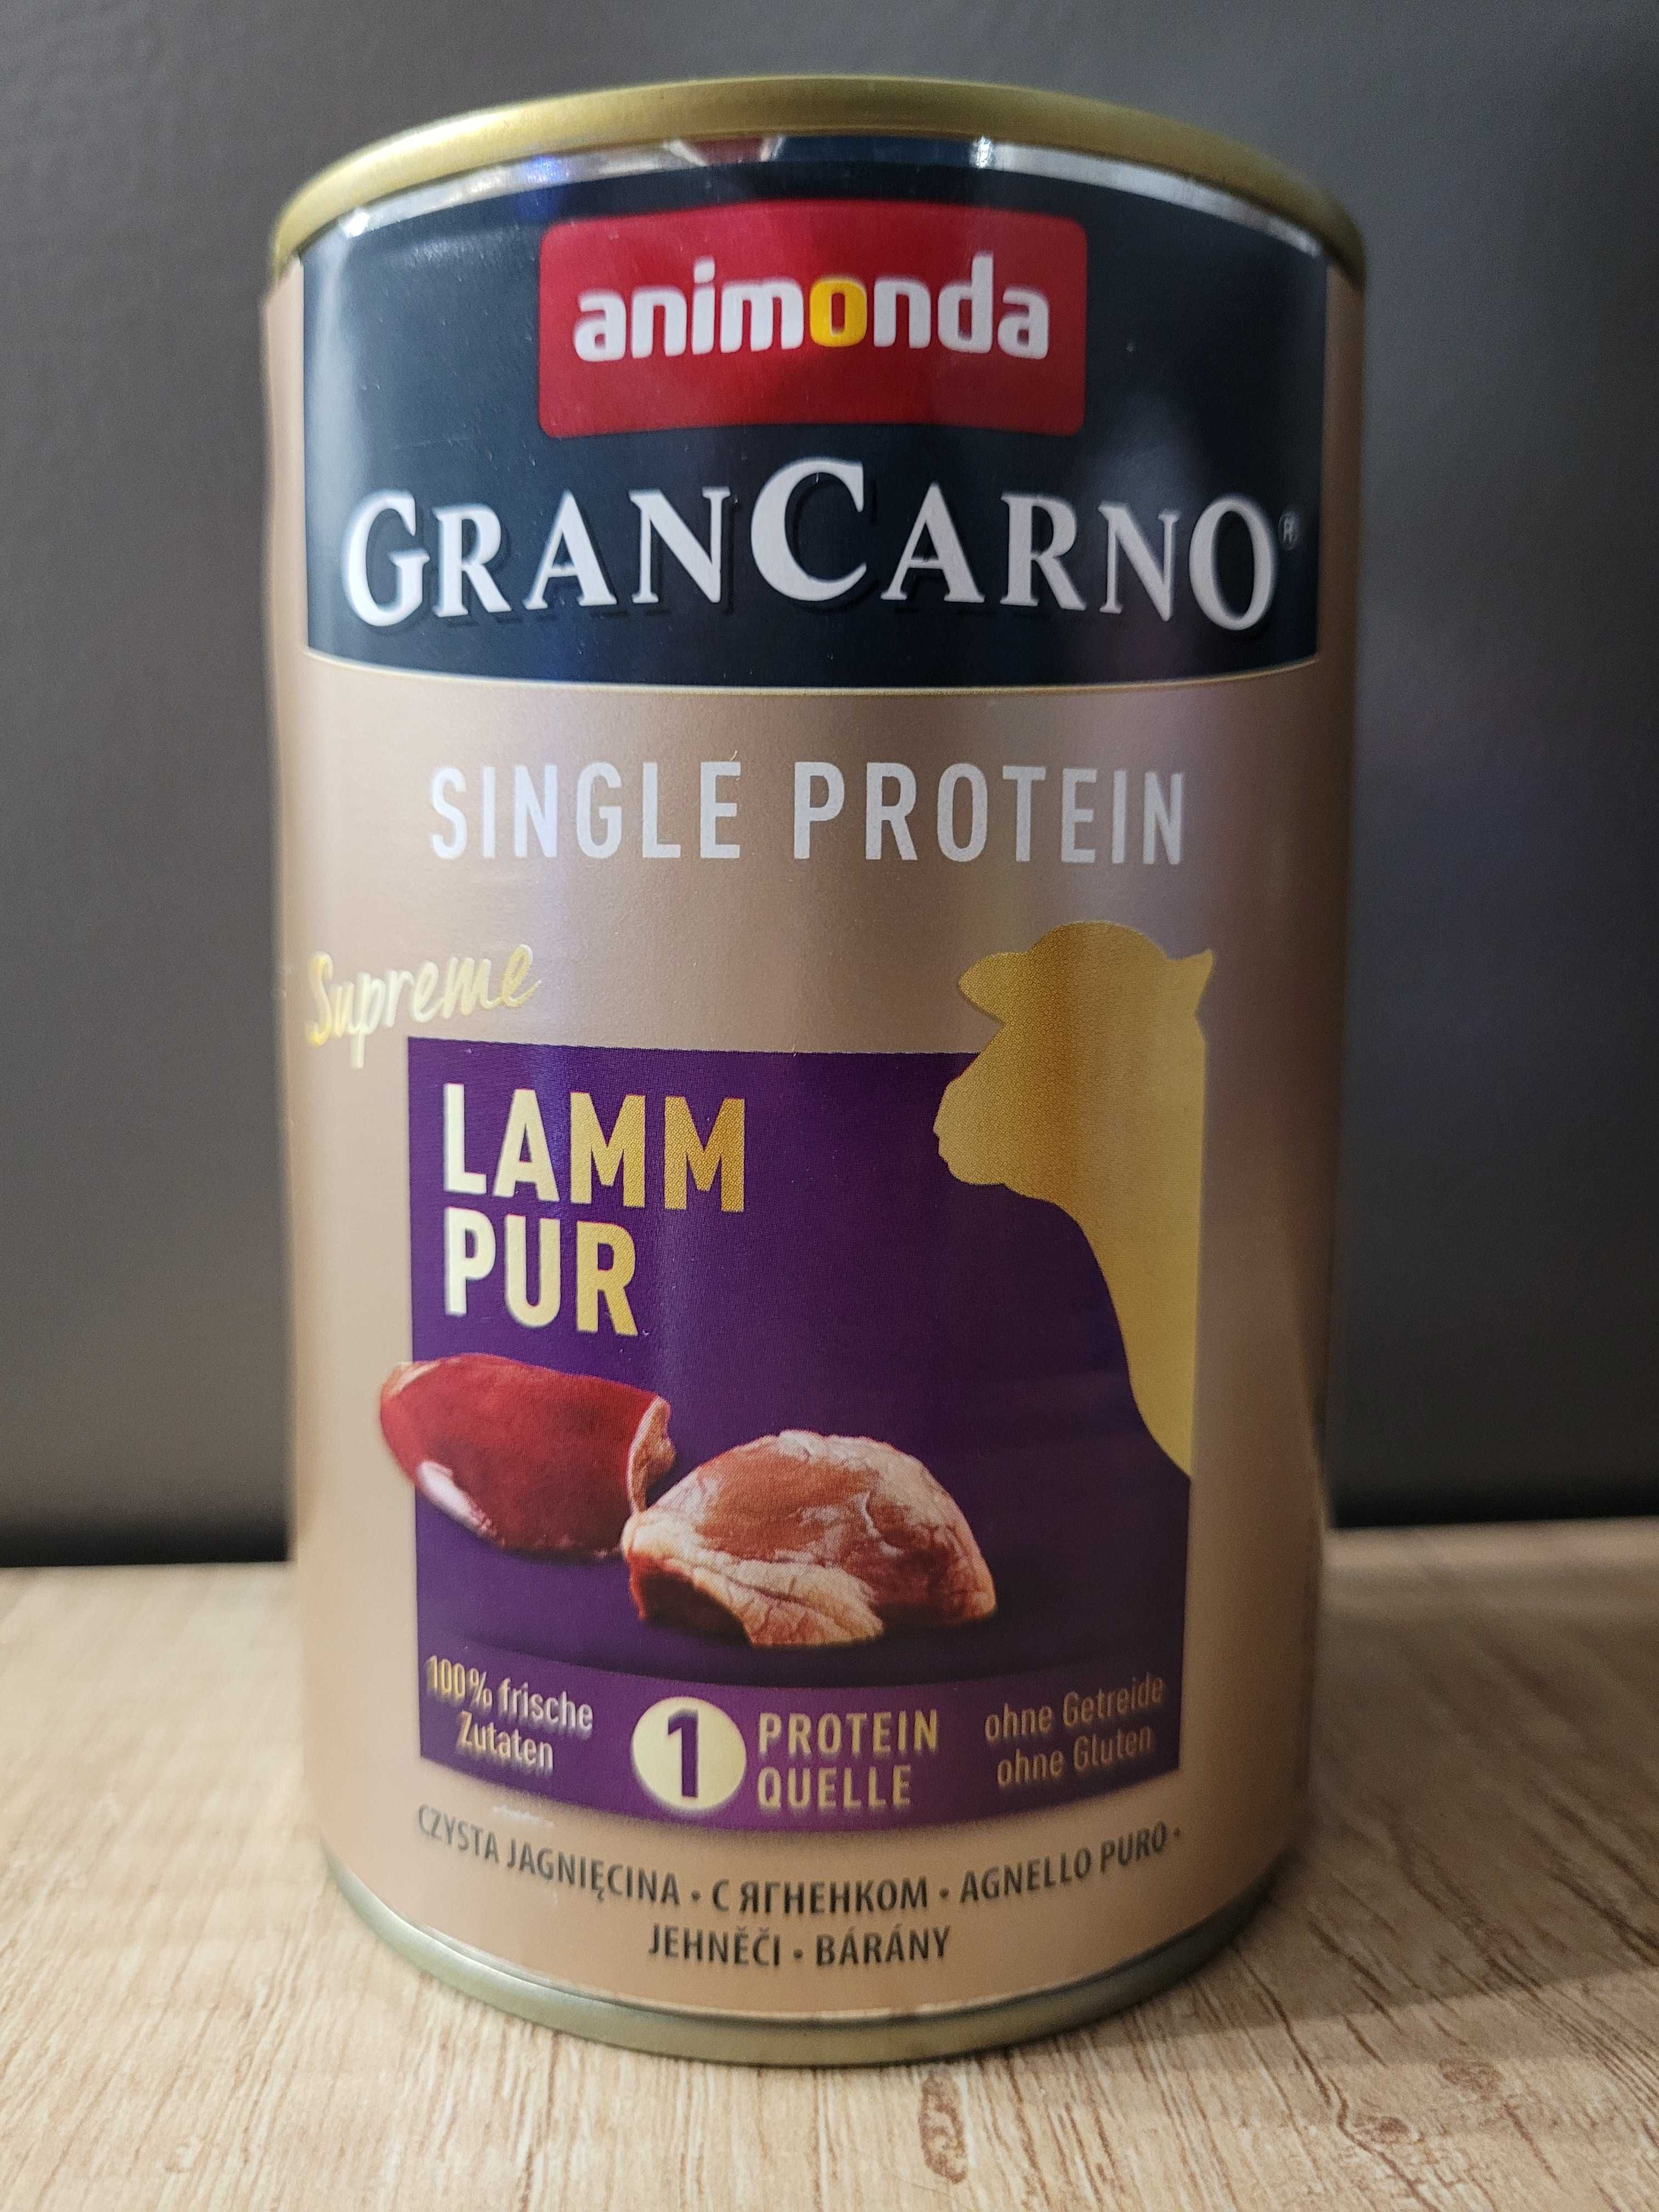 Karma mokra dla psa, Animoda GranCarno single protein jagnięcina